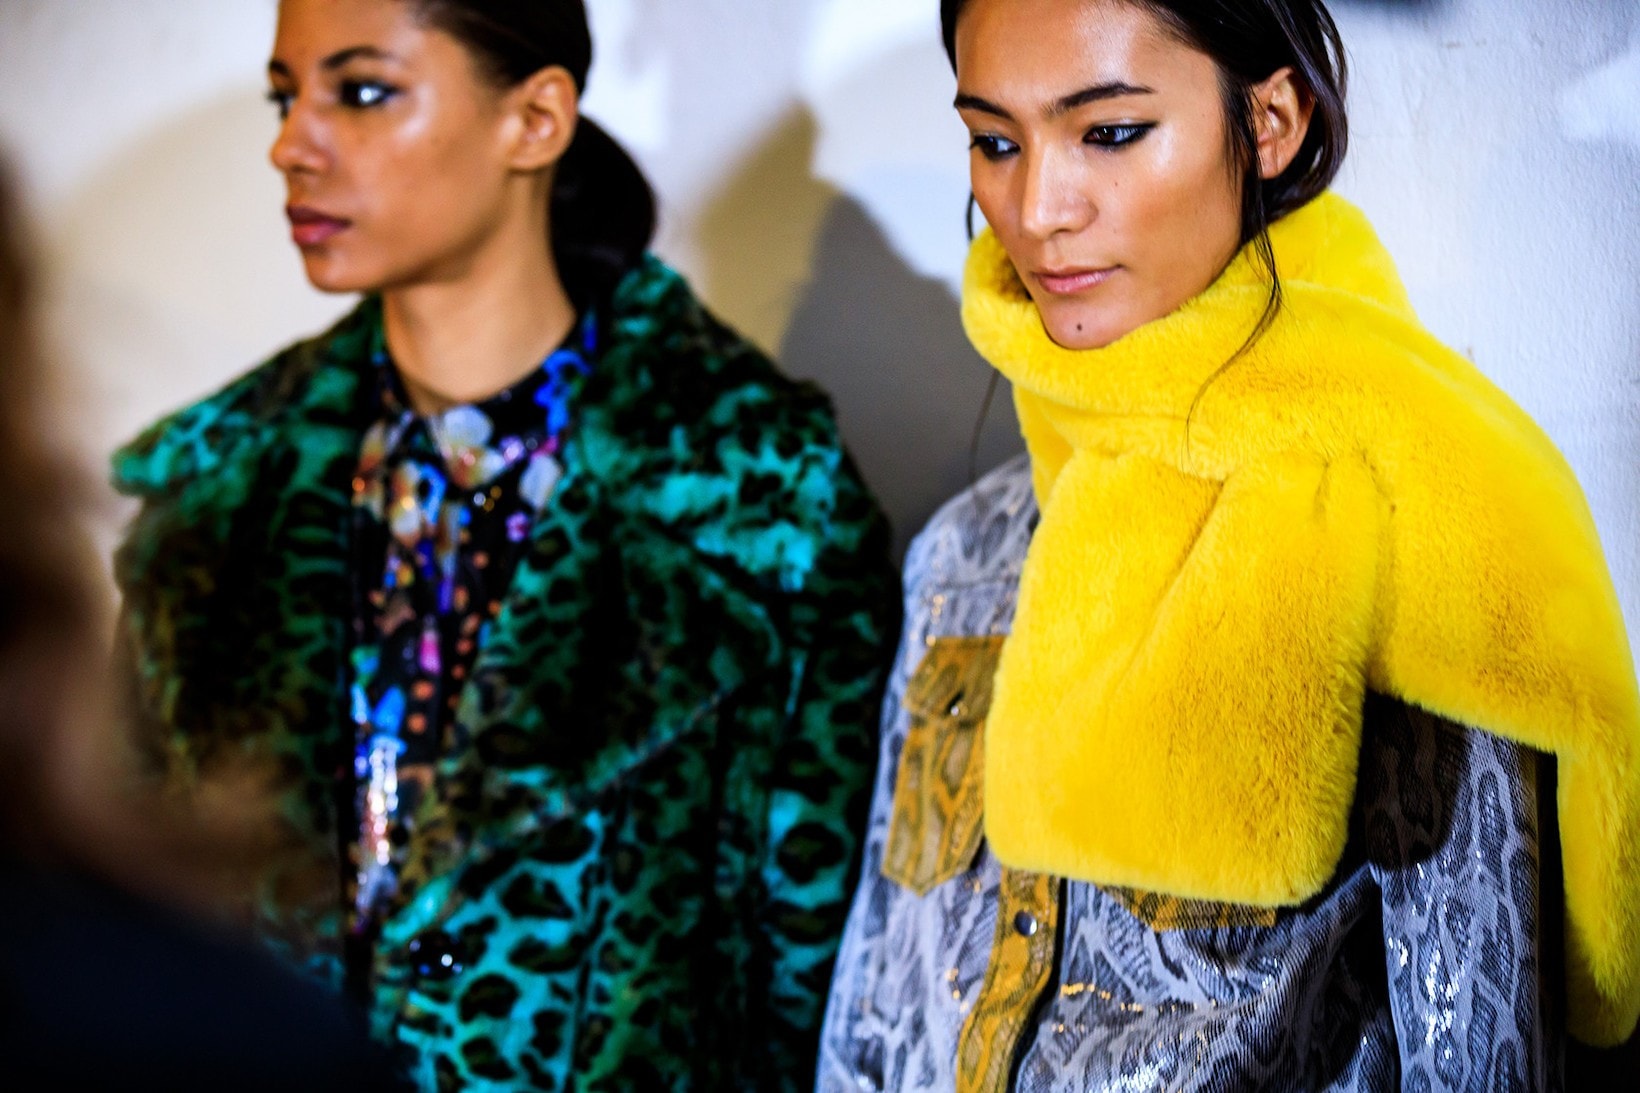 Copenhagen Fashion Week Bans Fur All Shows Sustainability News